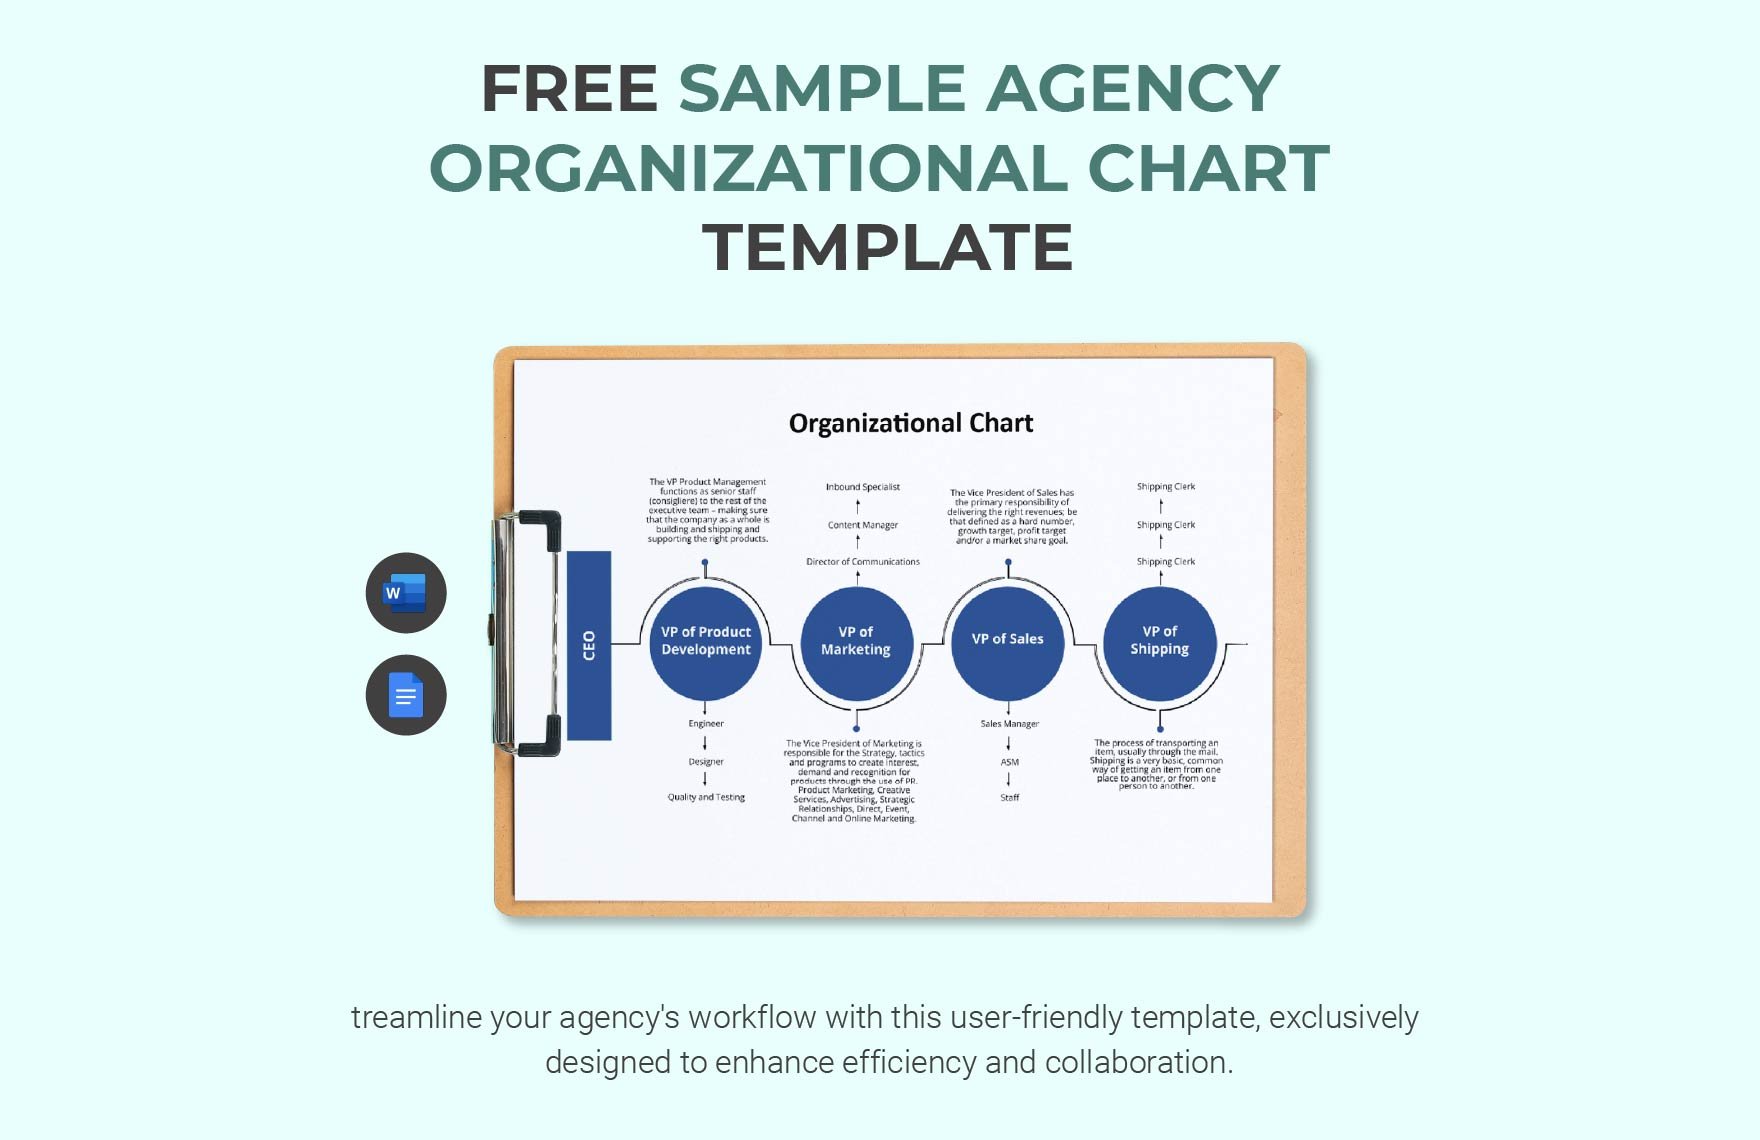 Sample Agency Organizational Chart Template